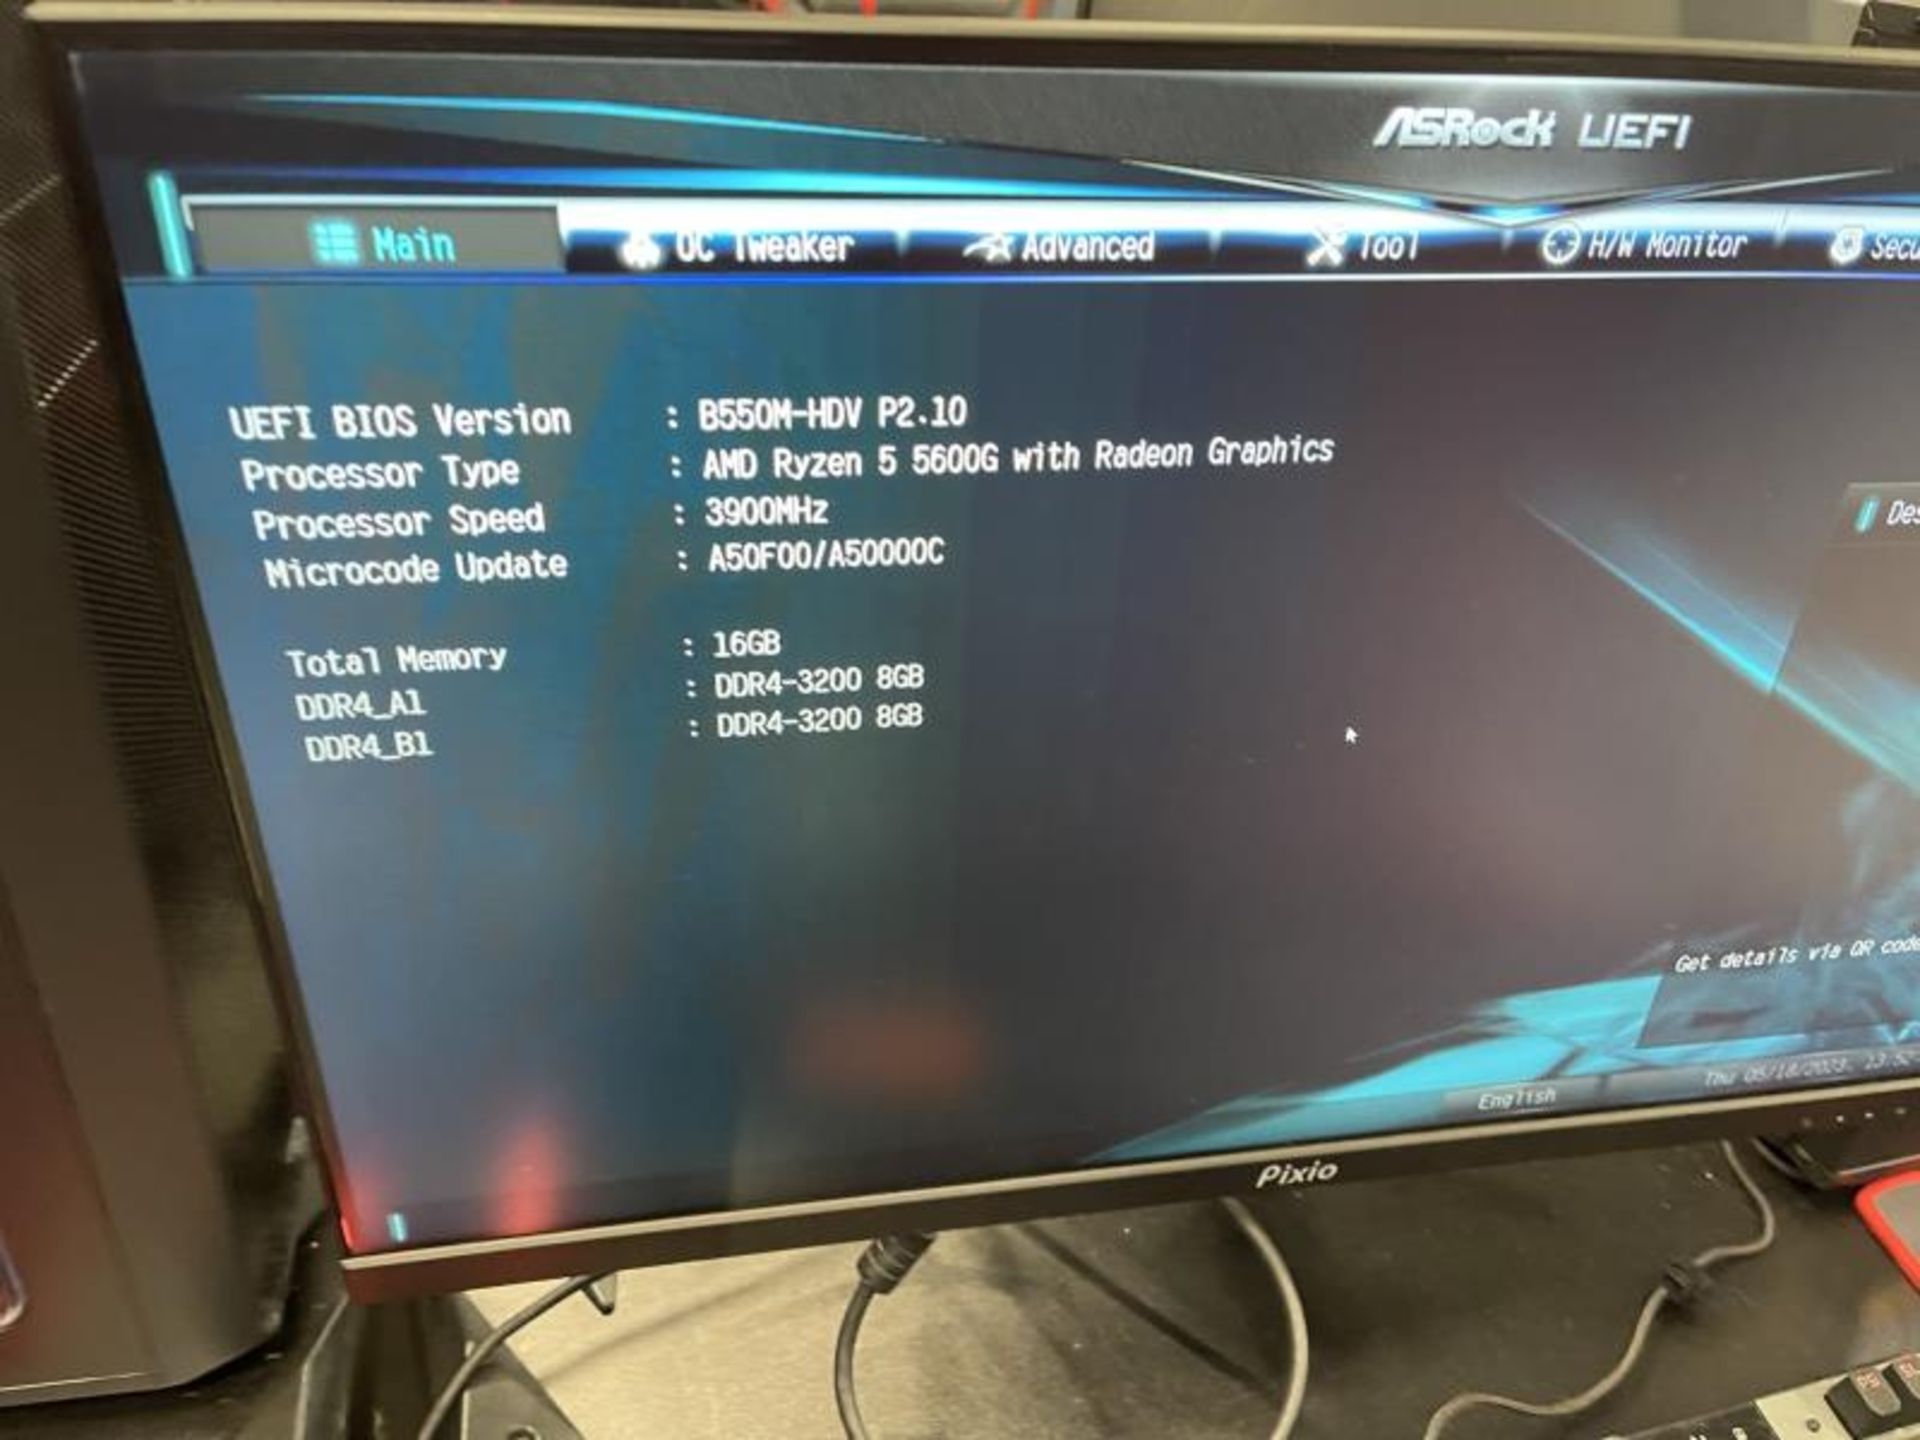 Gaming PC: Fratel Design Case, Processor: ASRock Challenger Series / Radeon, Super Flower Power Supp - Image 2 of 5